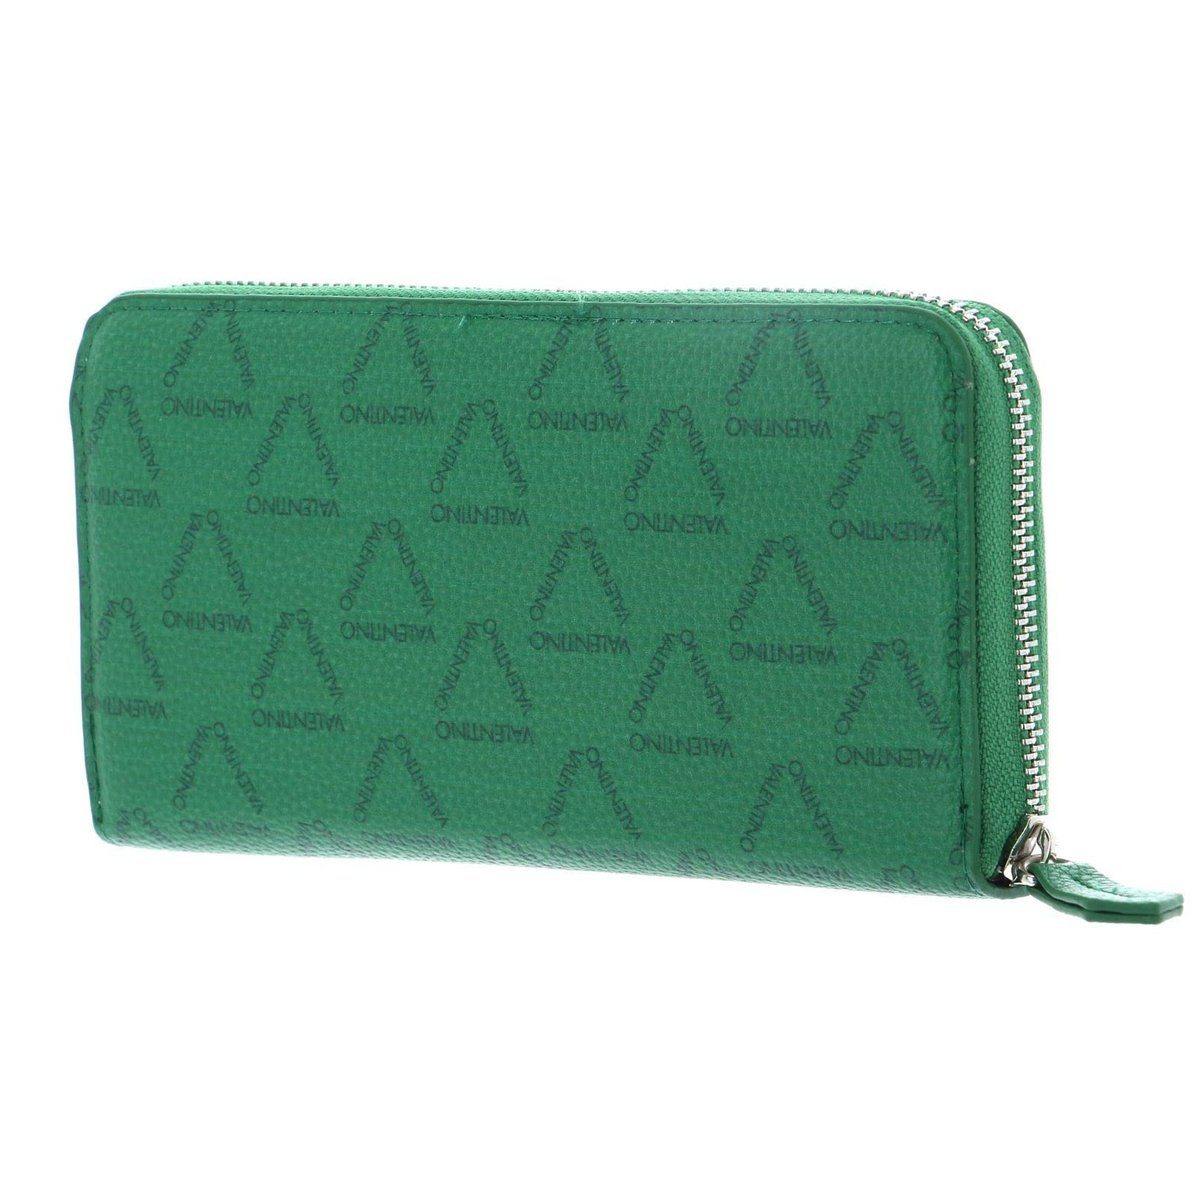 (1-tlg., Angabe) BAGS Multicolor keine Geldbörse / Verde VALENTINO grün